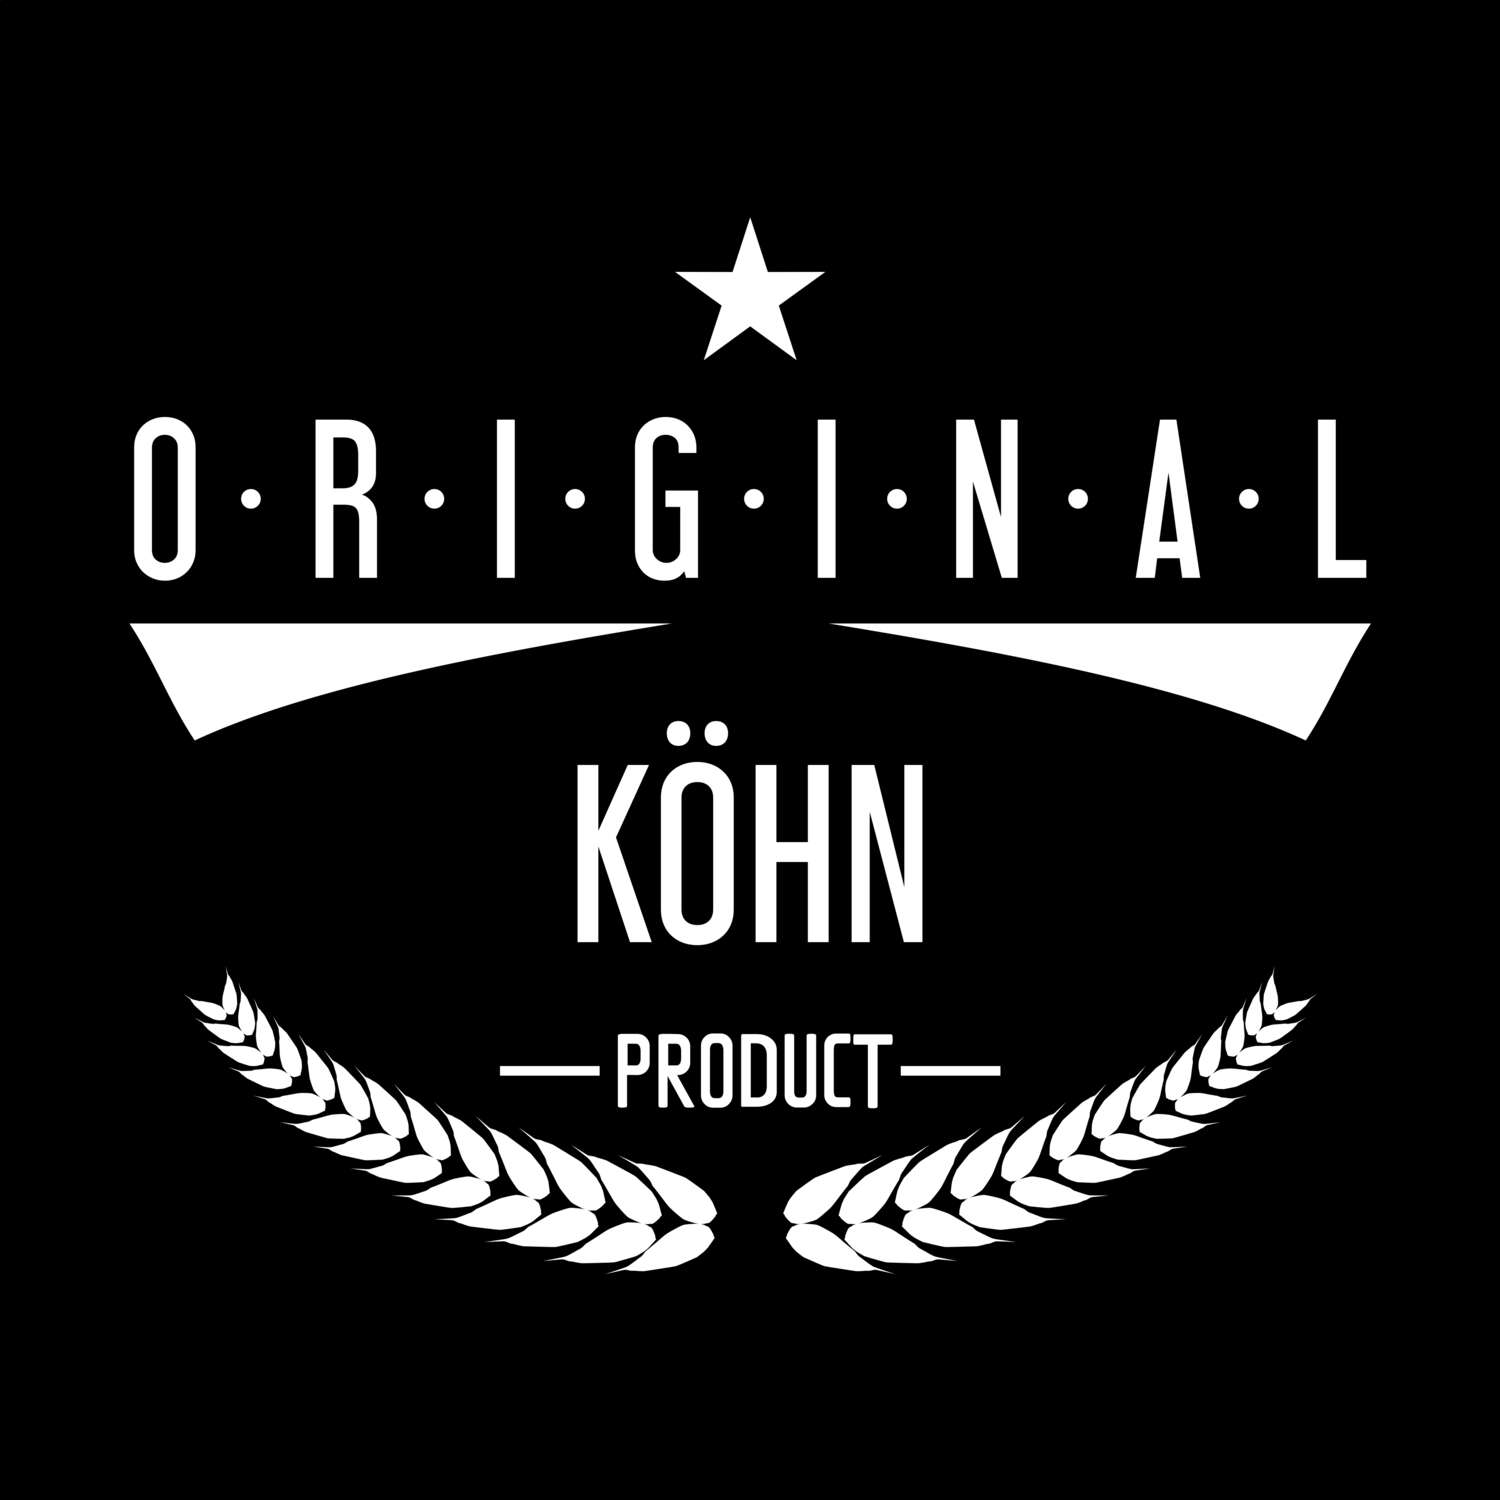 Köhn T-Shirt »Original Product«